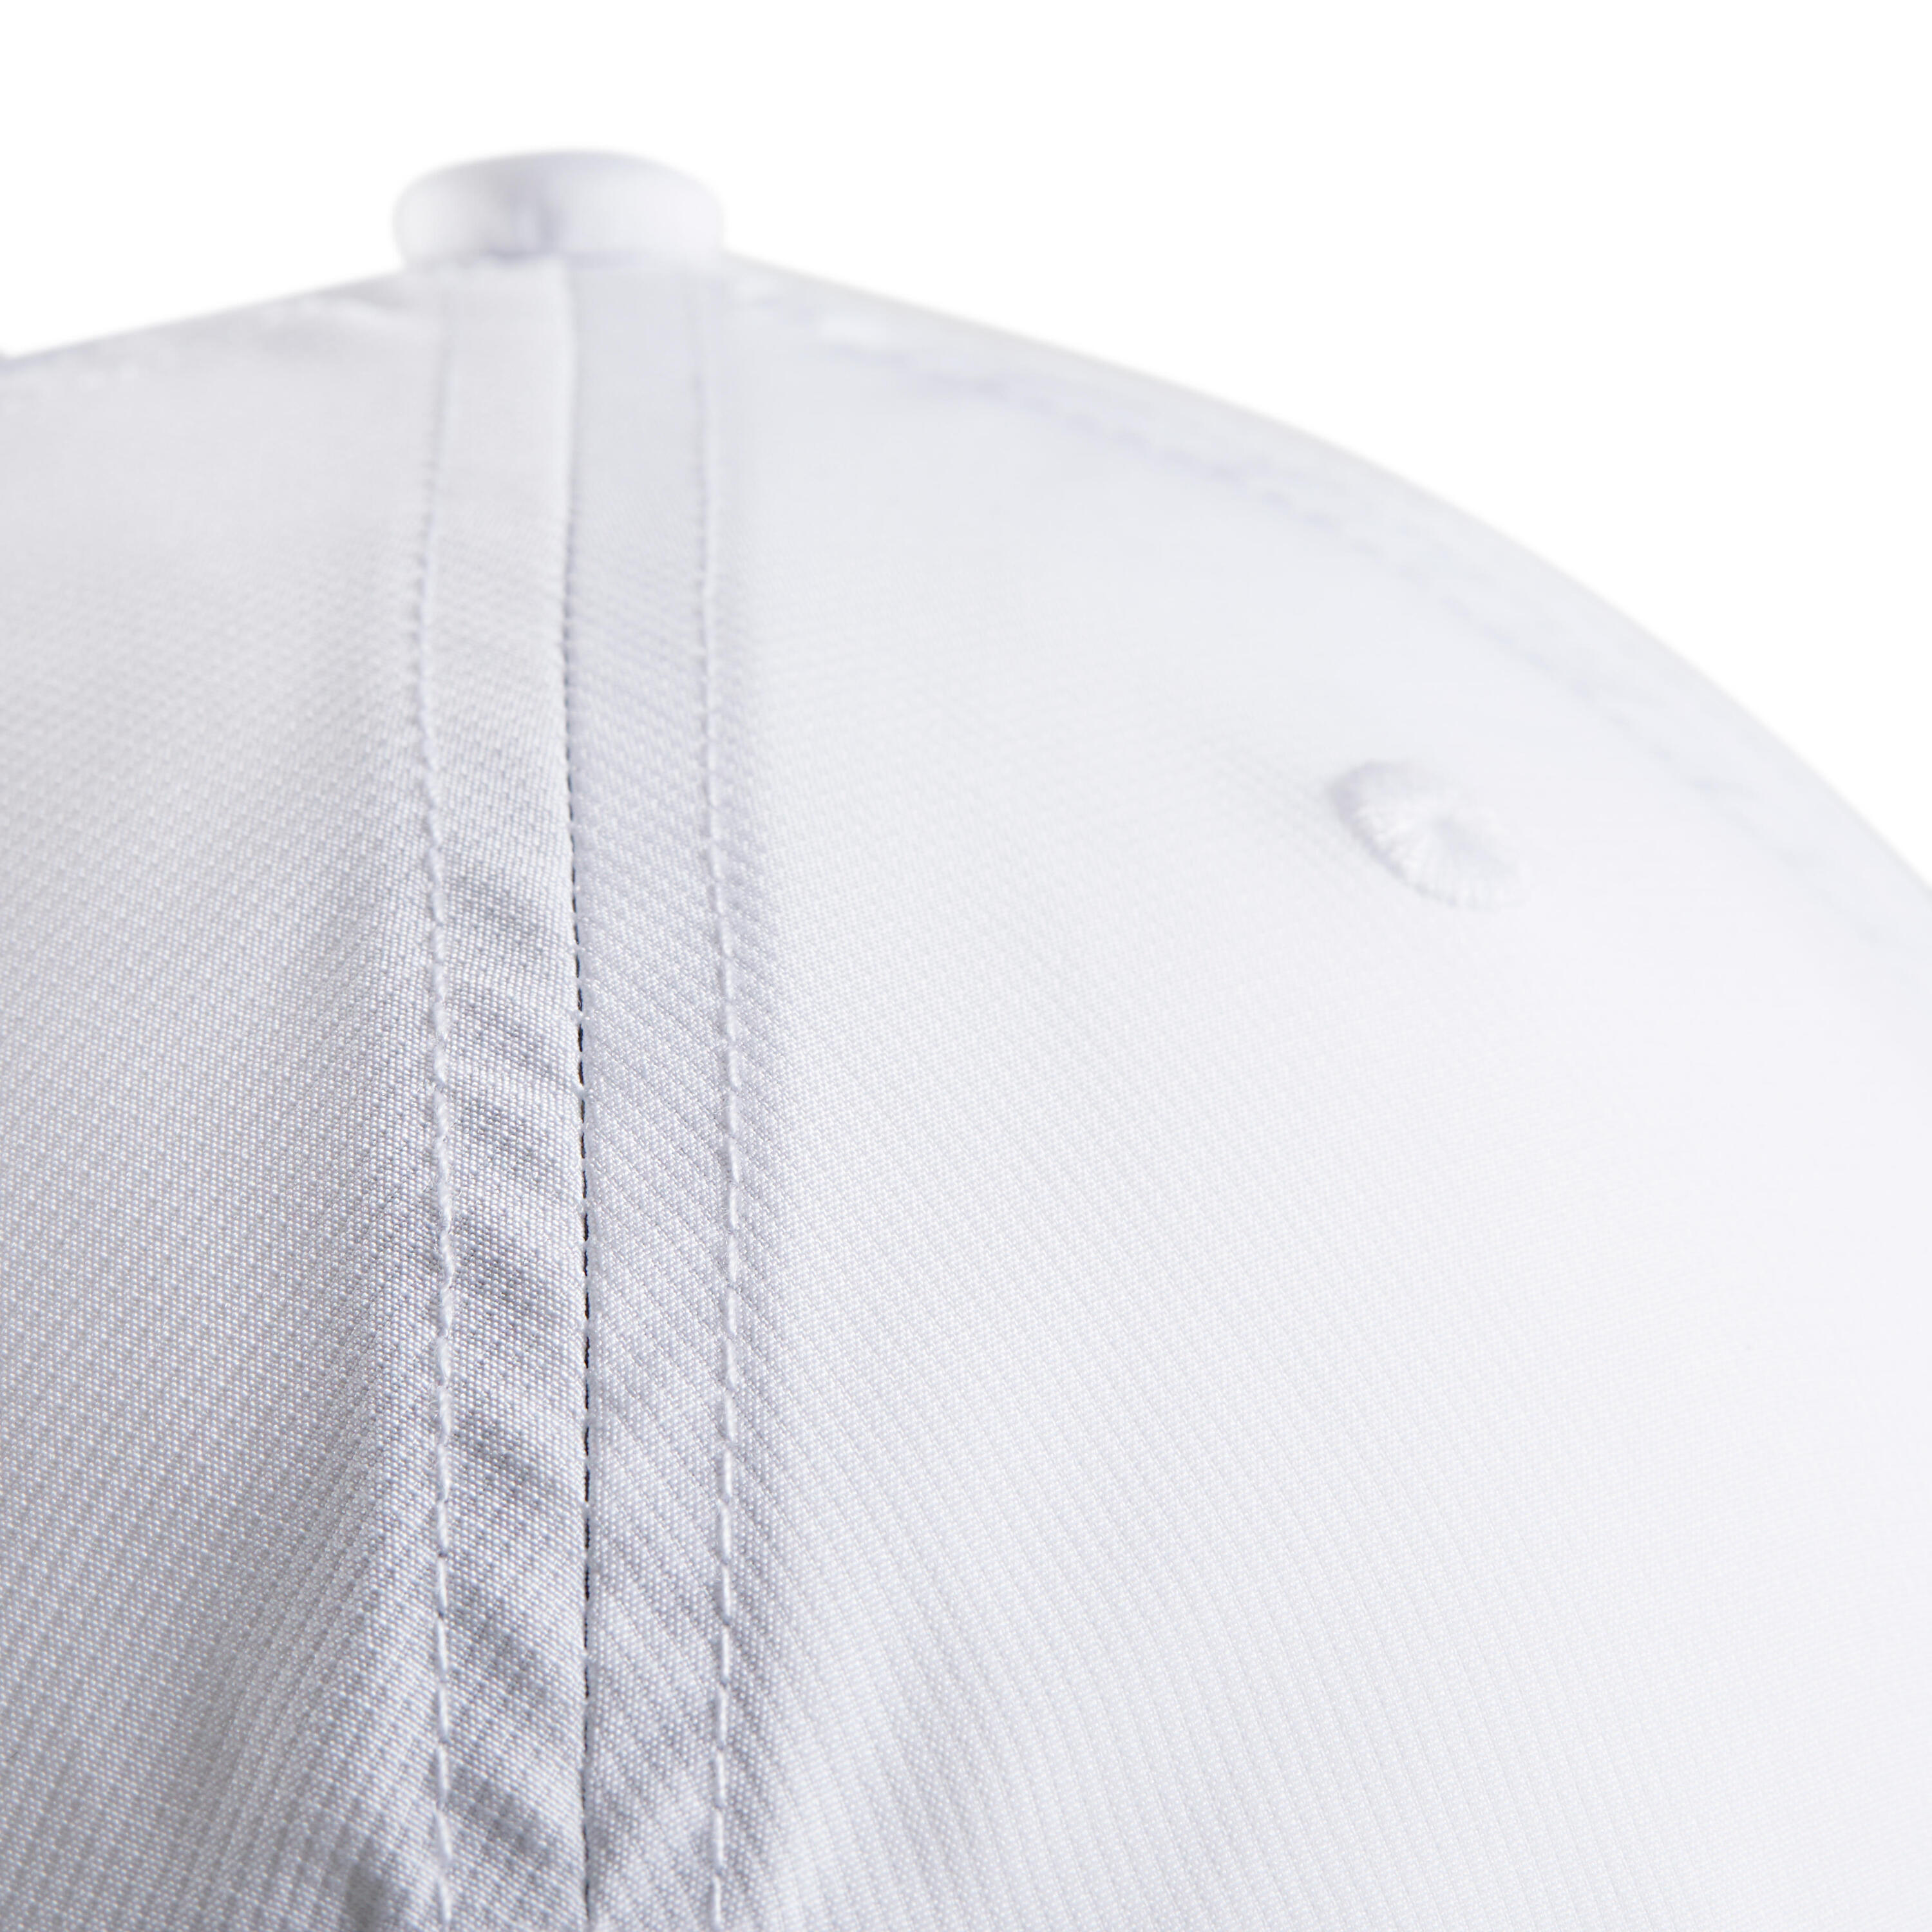 Adult's golf cap - WW 500 white 4/4